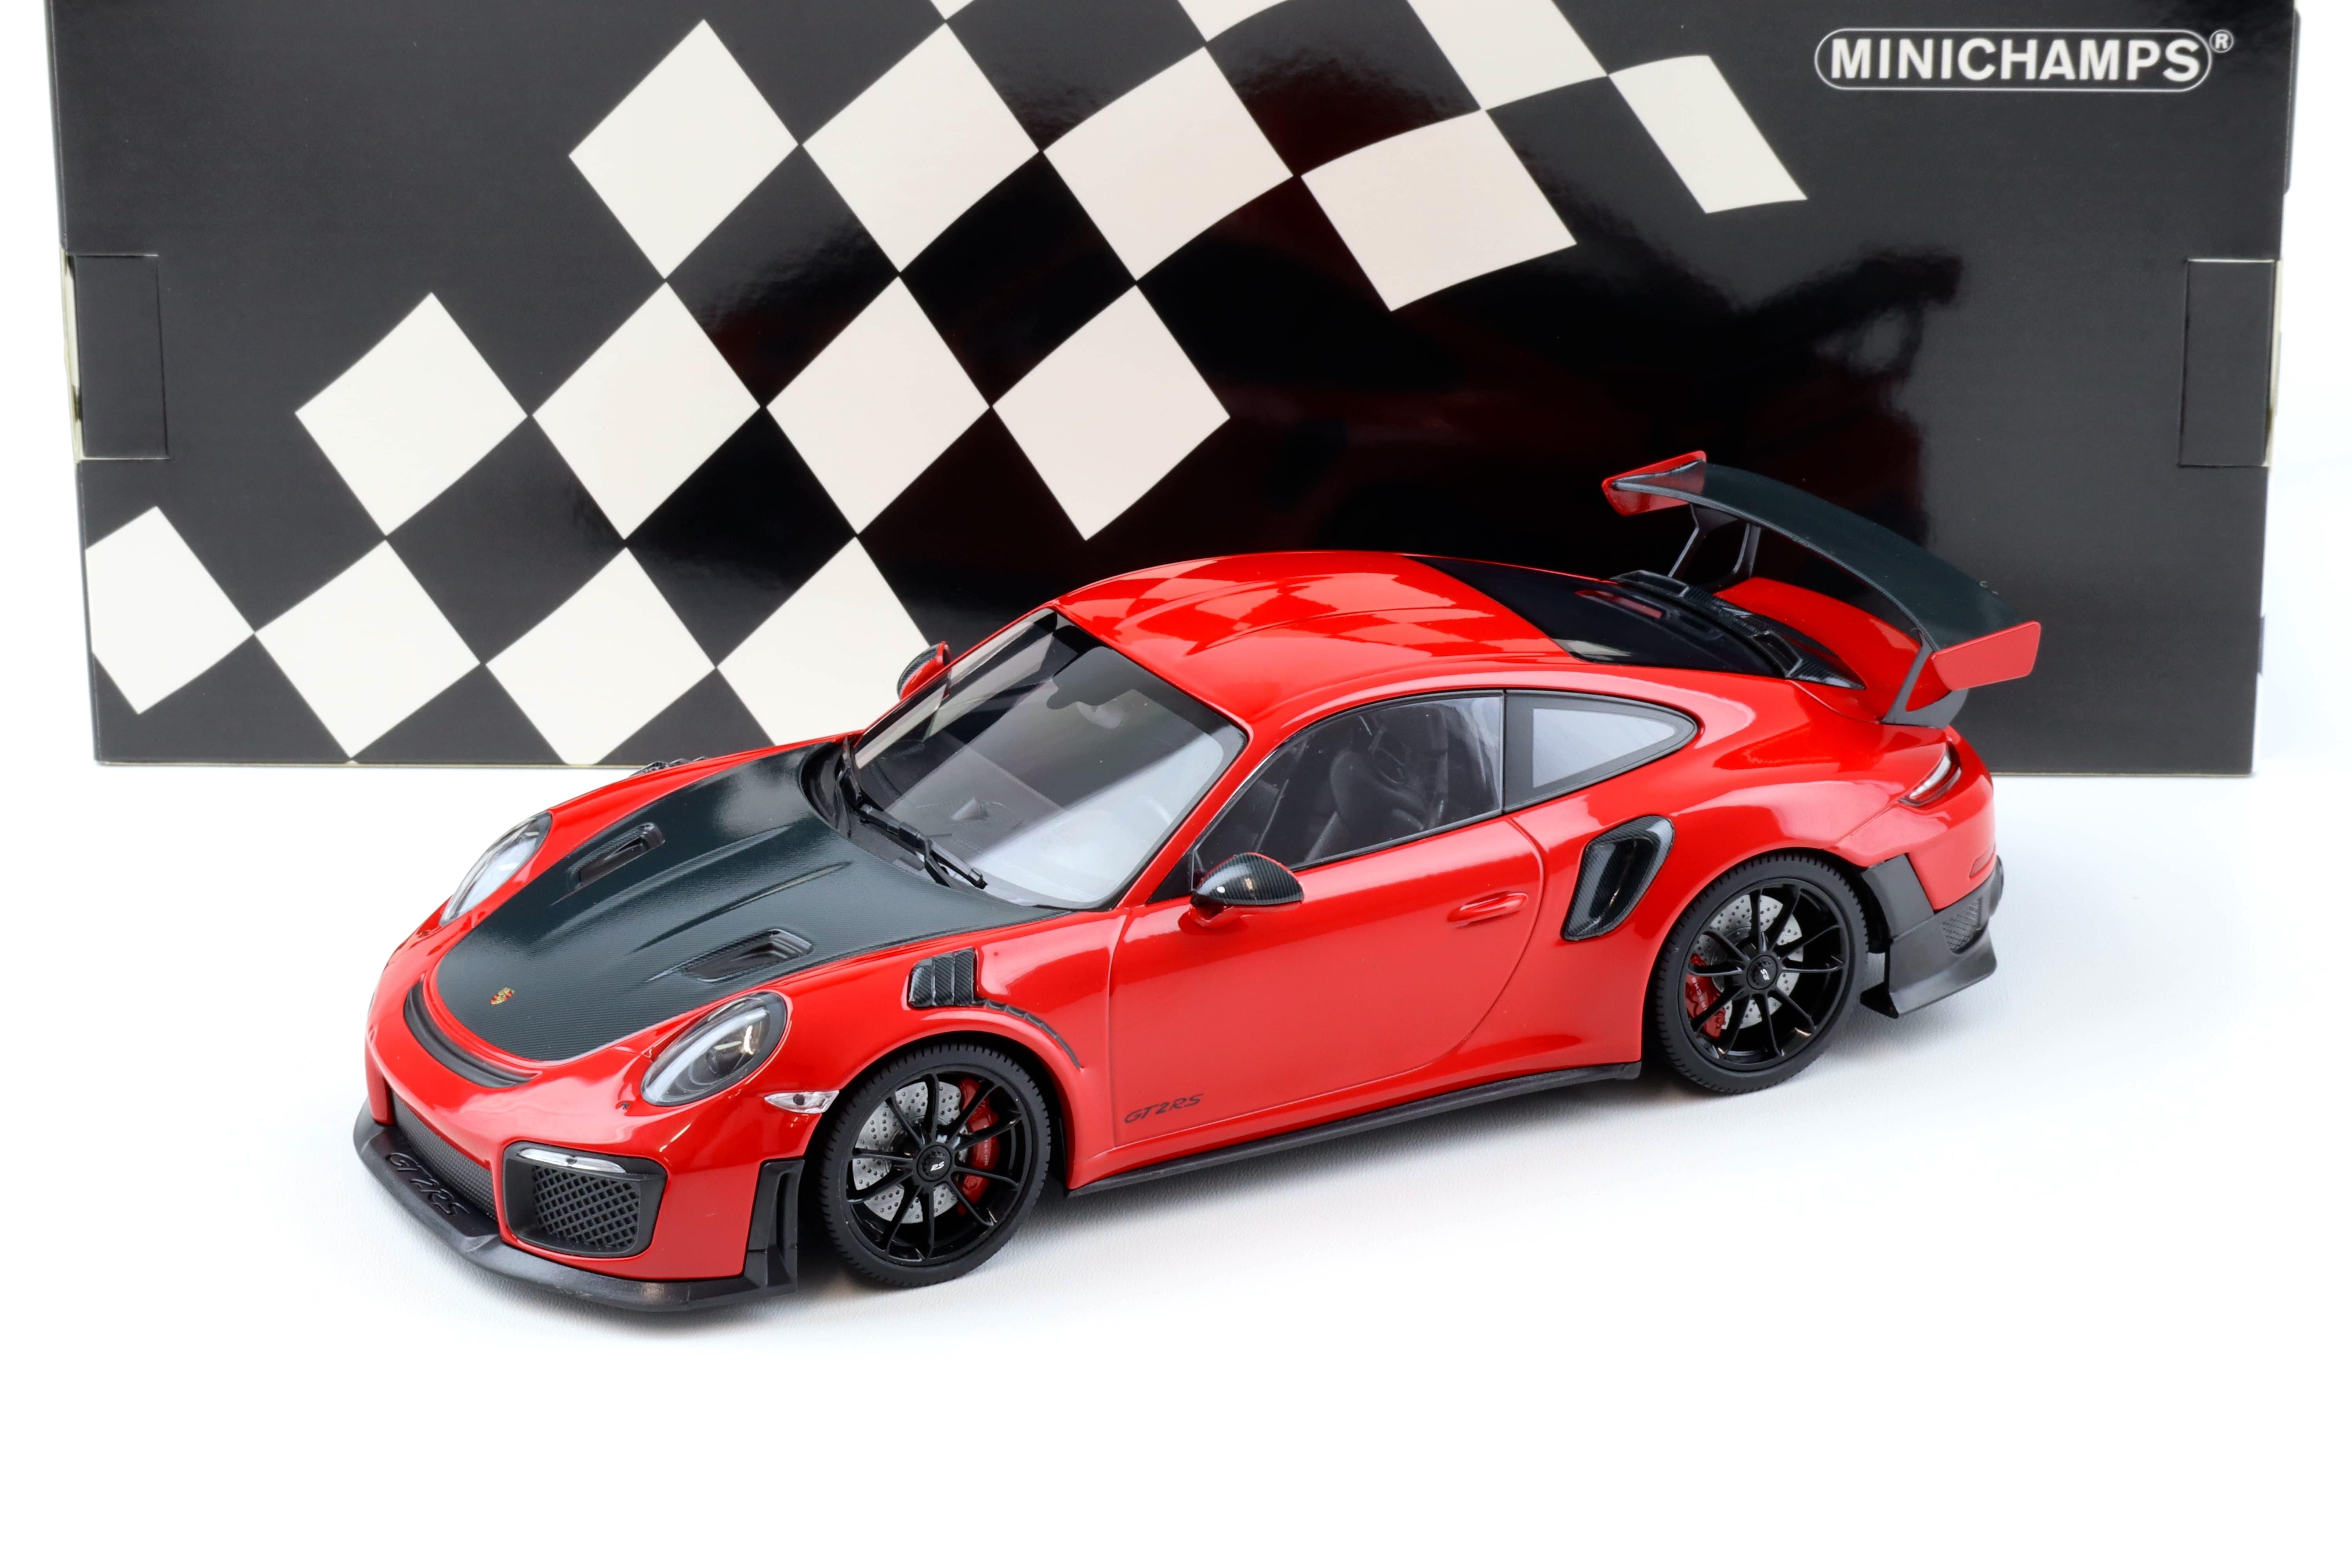 1:18 Minichamps Porsche 911 (991.2) GT2 RS red with black wheels 2018